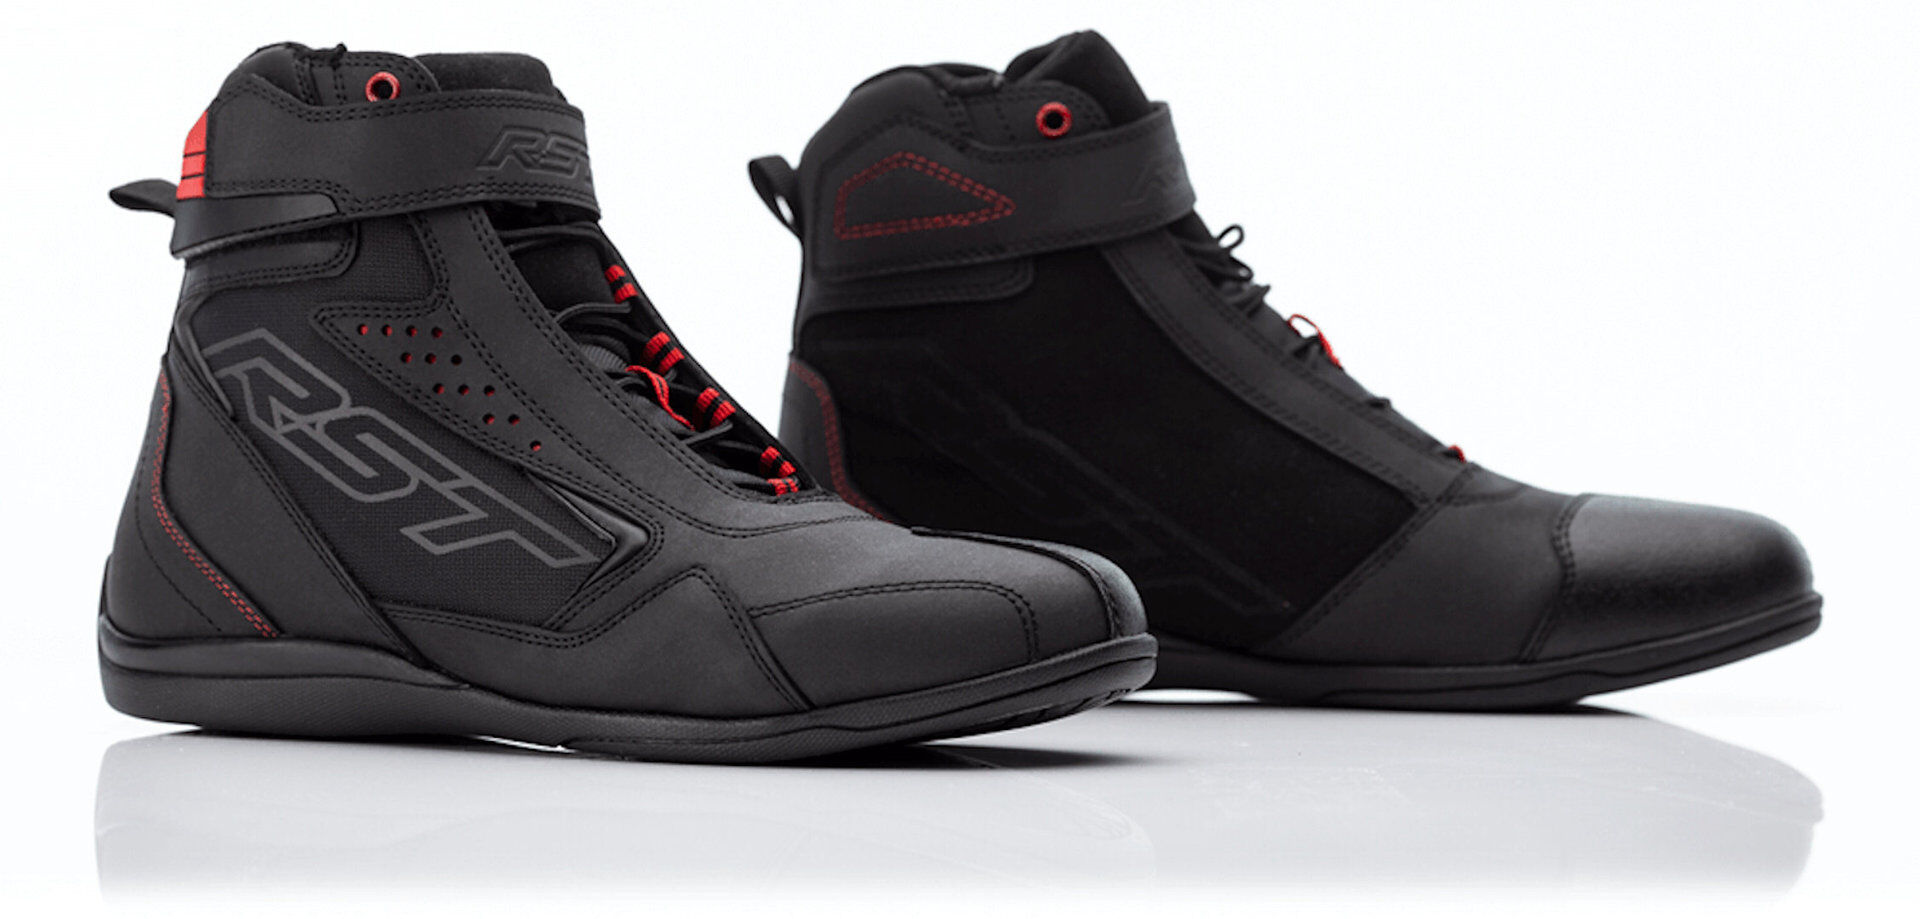 RST Frontier Zapatos de motocicleta para mujer - Negro Rojo (40)